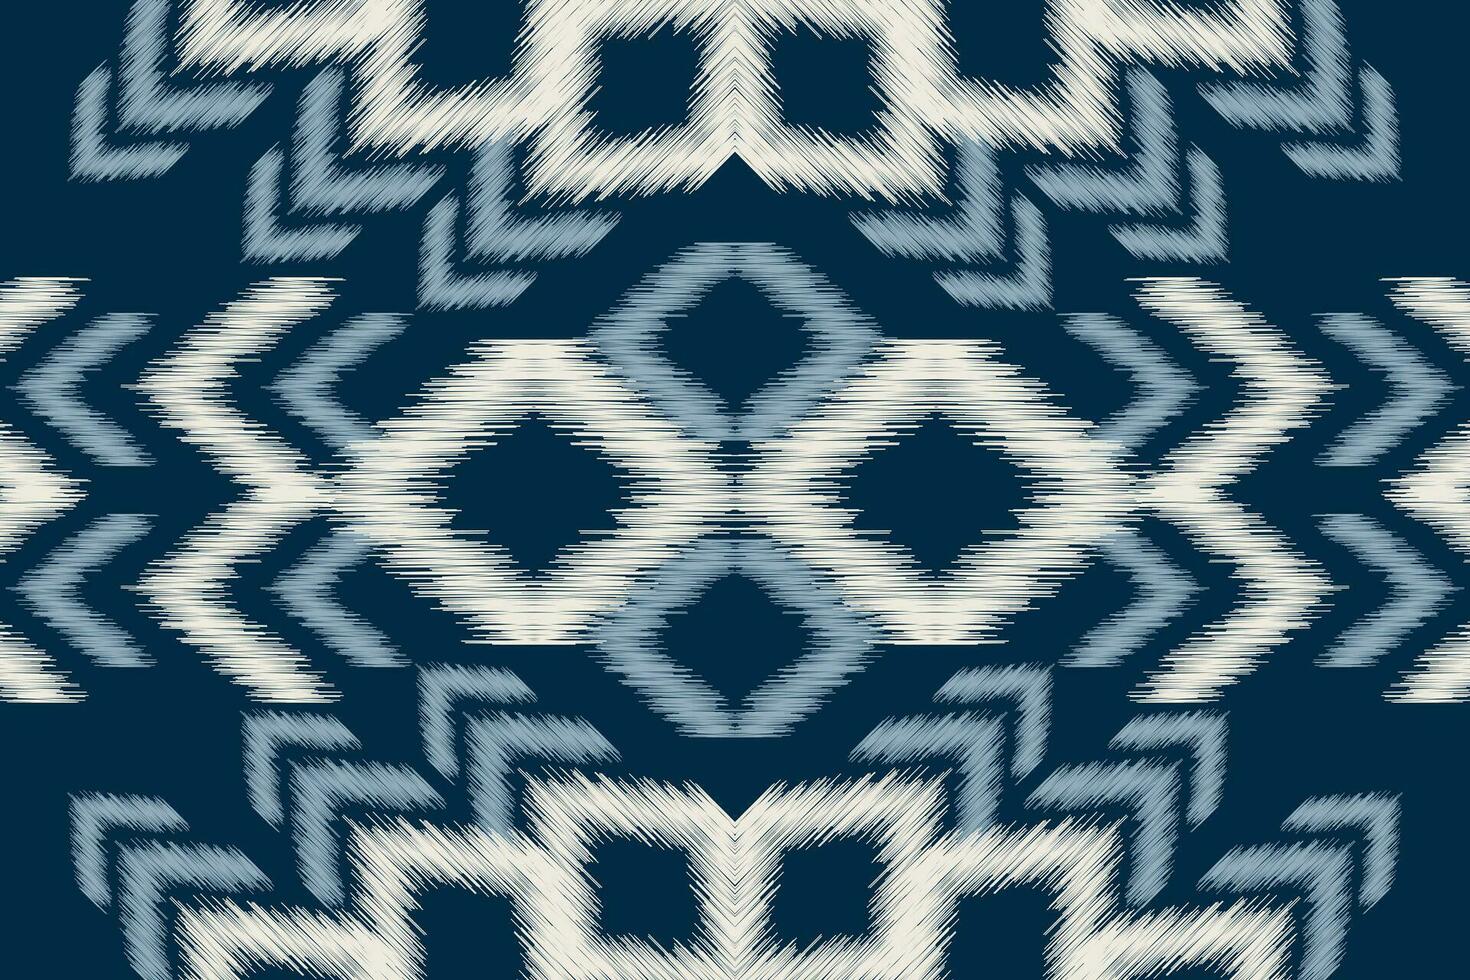 etnisk ikat tyg mönster geometrisk stil.afrikansk ikat broderi etnisk orientalisk mönster blå bakgrund. abstrakt, vektor, illustration.textur, kläder, ram, dekoration, matta, motiv. vektor